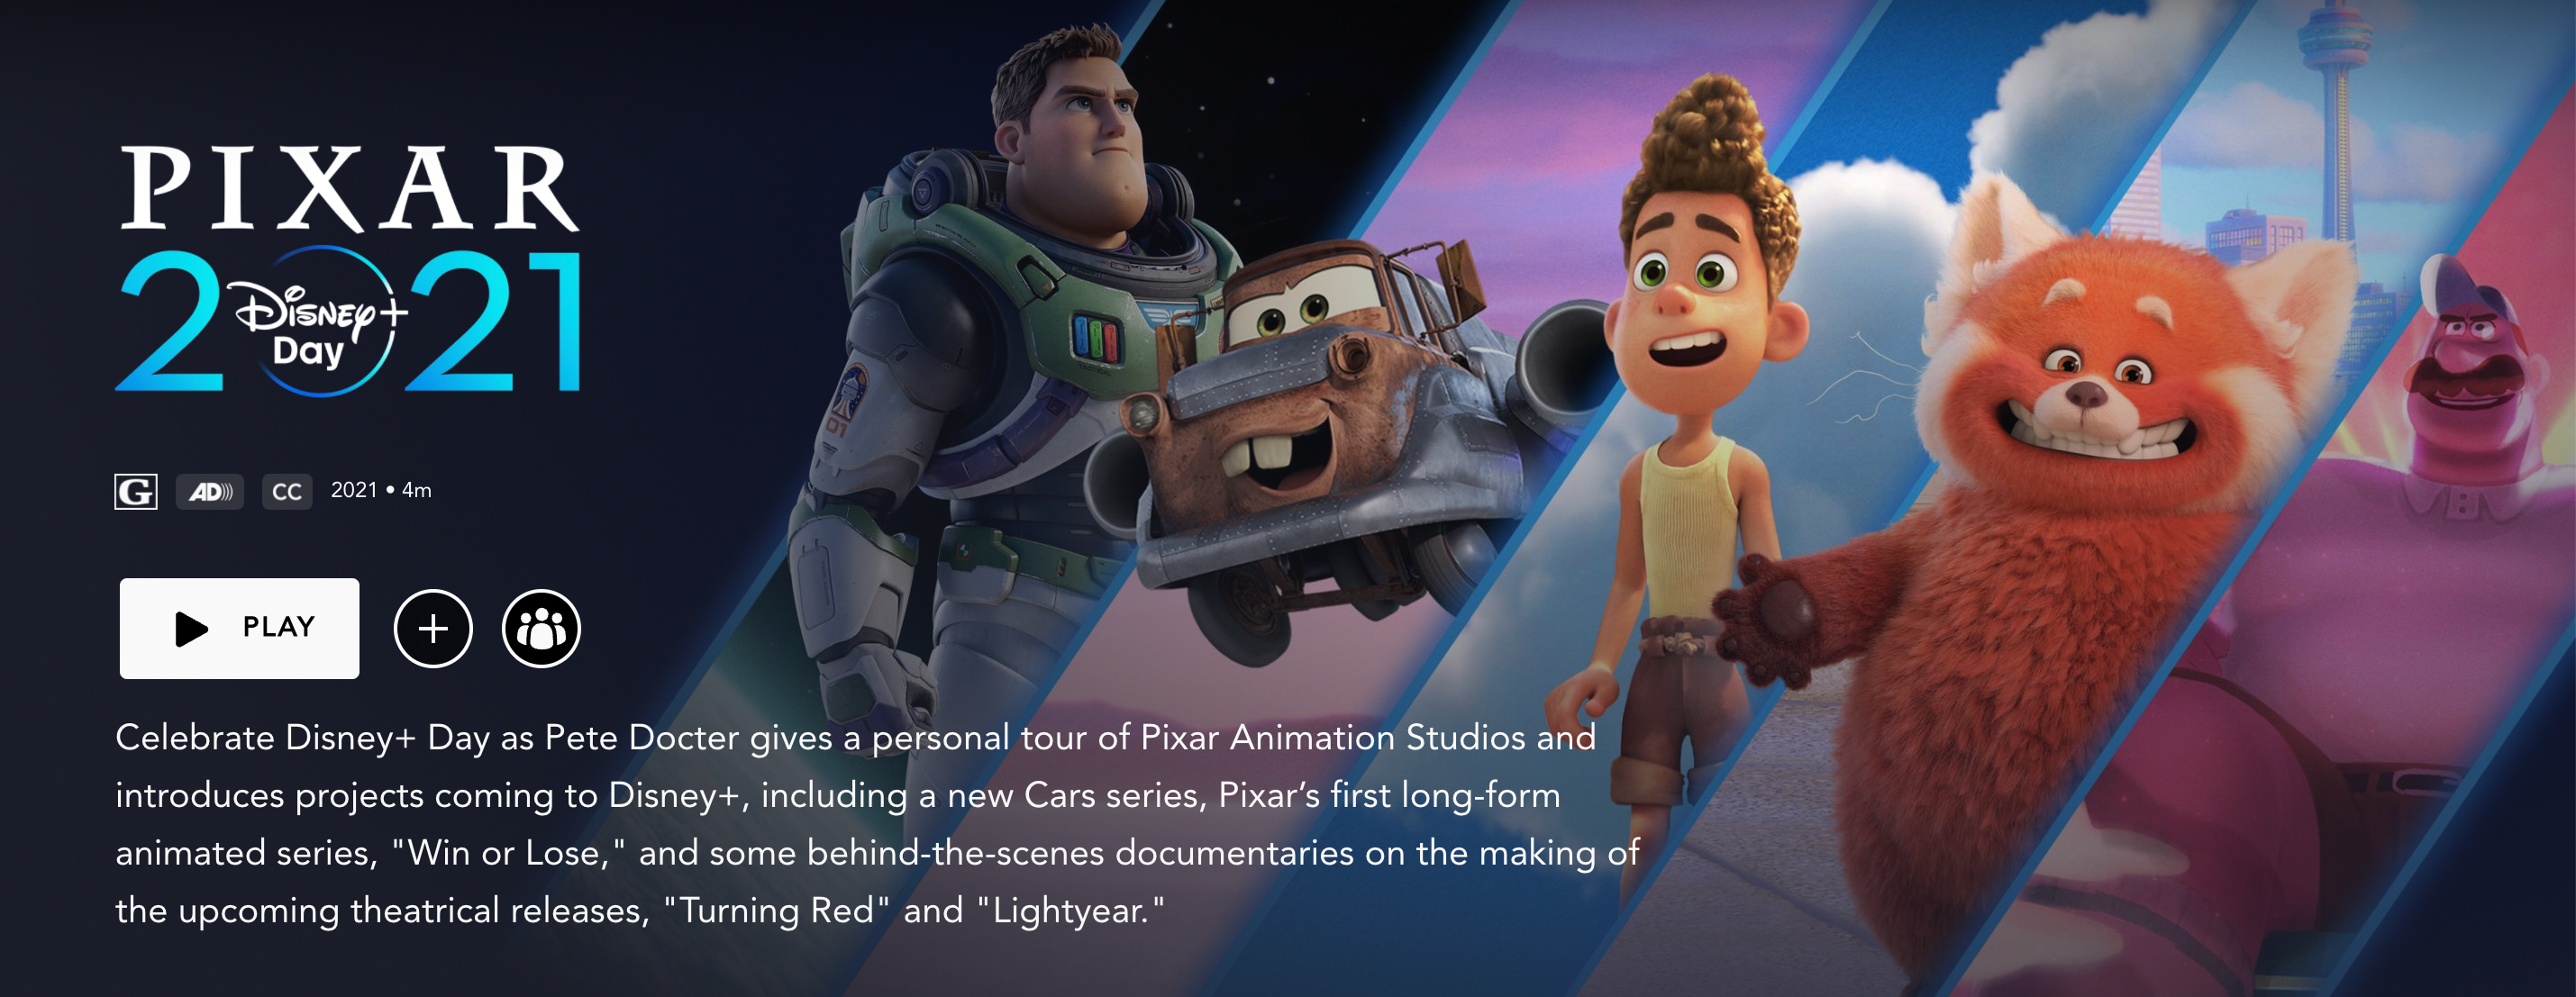 Pixar’s Cars Spinoff Show Image Reveals New Mater Design